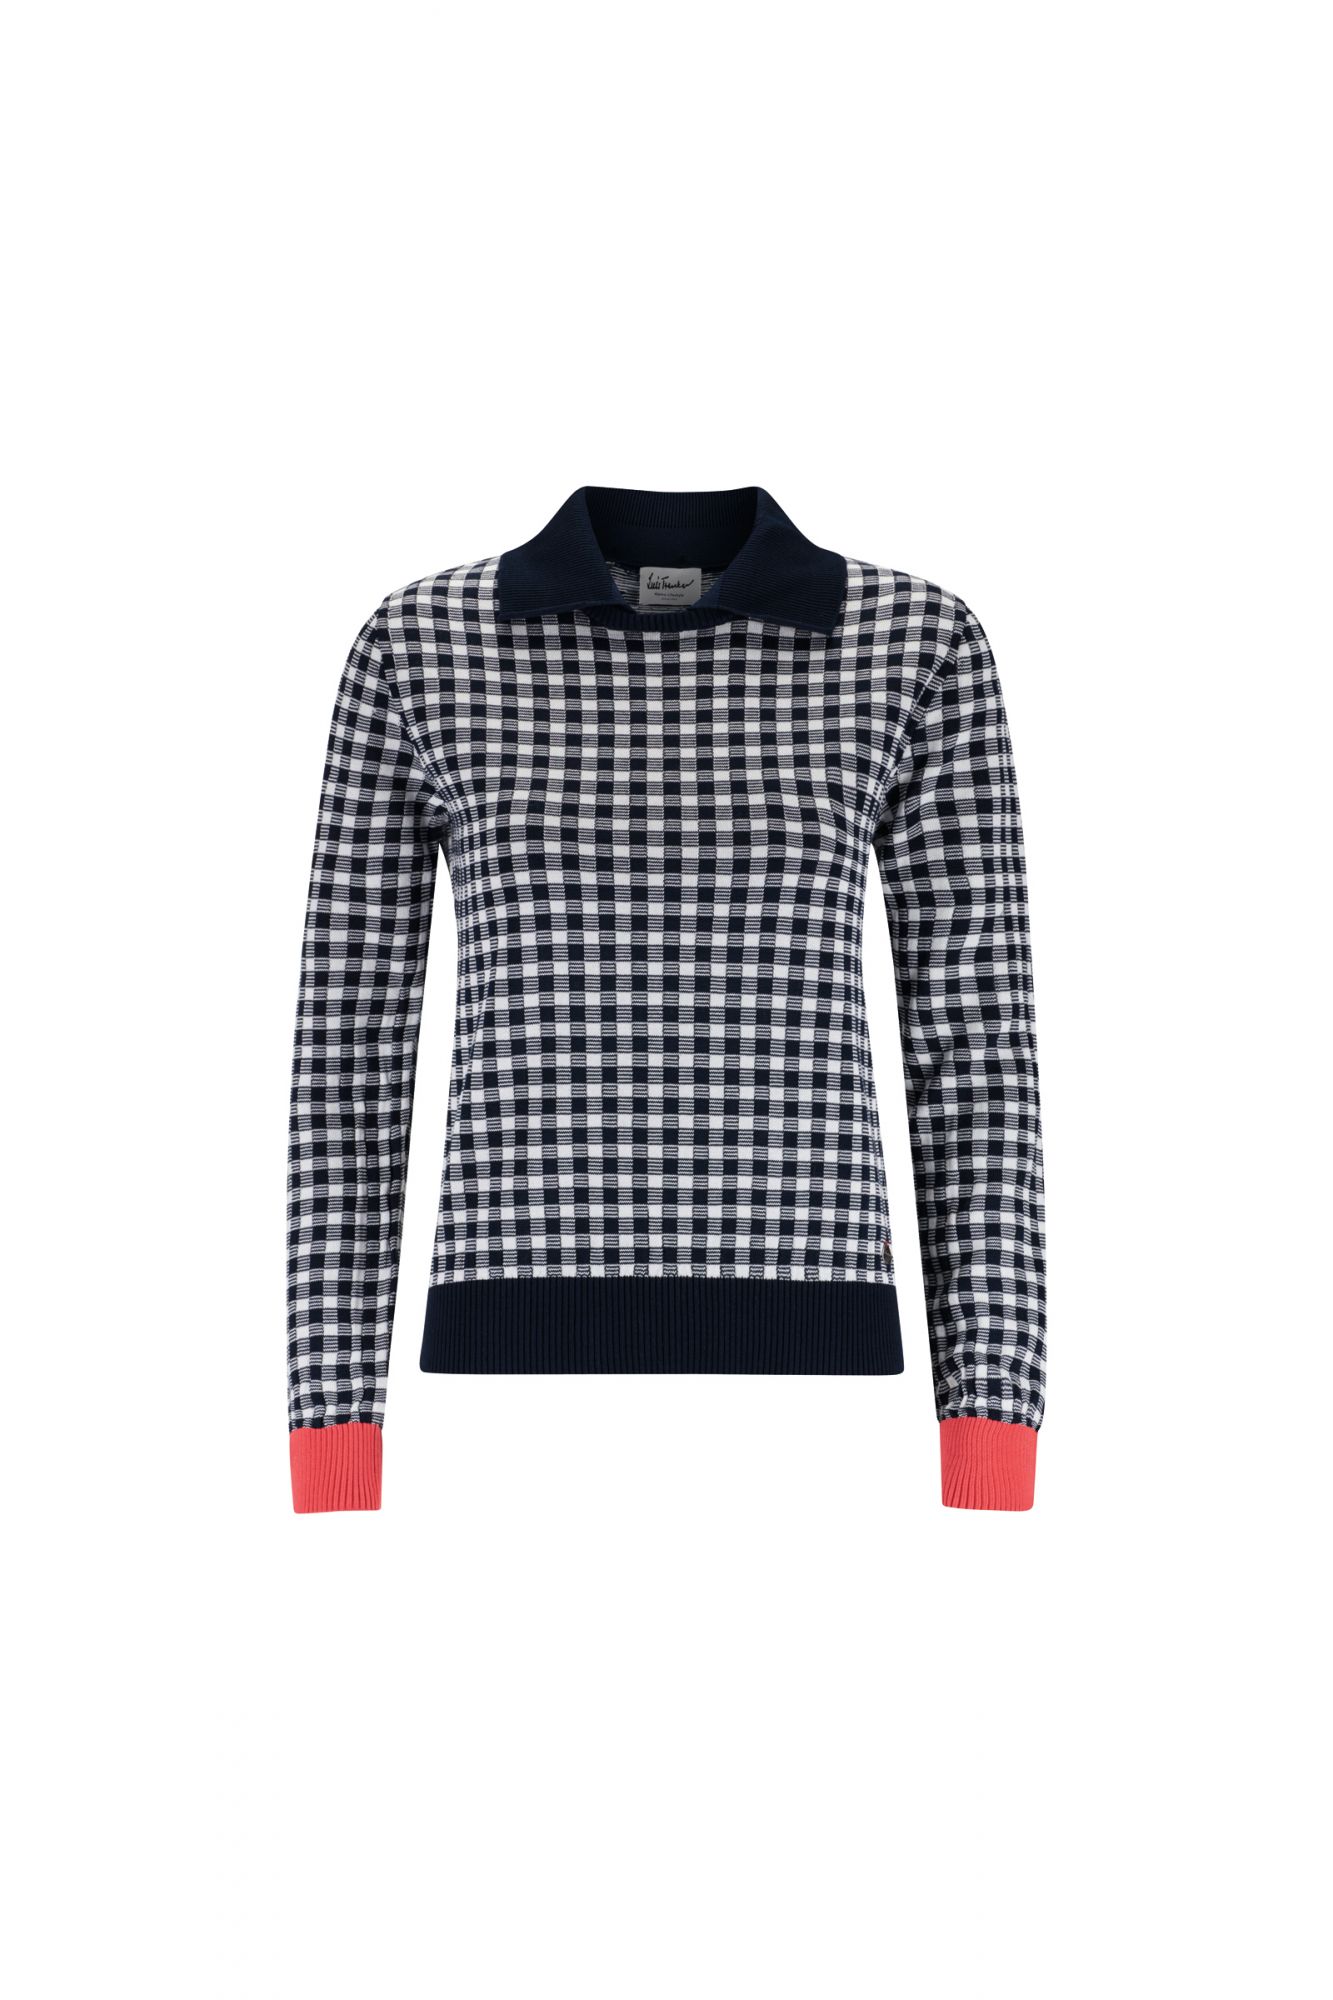 Luis Trenker Willow Kariert - Blau - Weiss- Female Sweaters und Hoodies- Grsse XL - Farbe Dunkelblau - Weiss